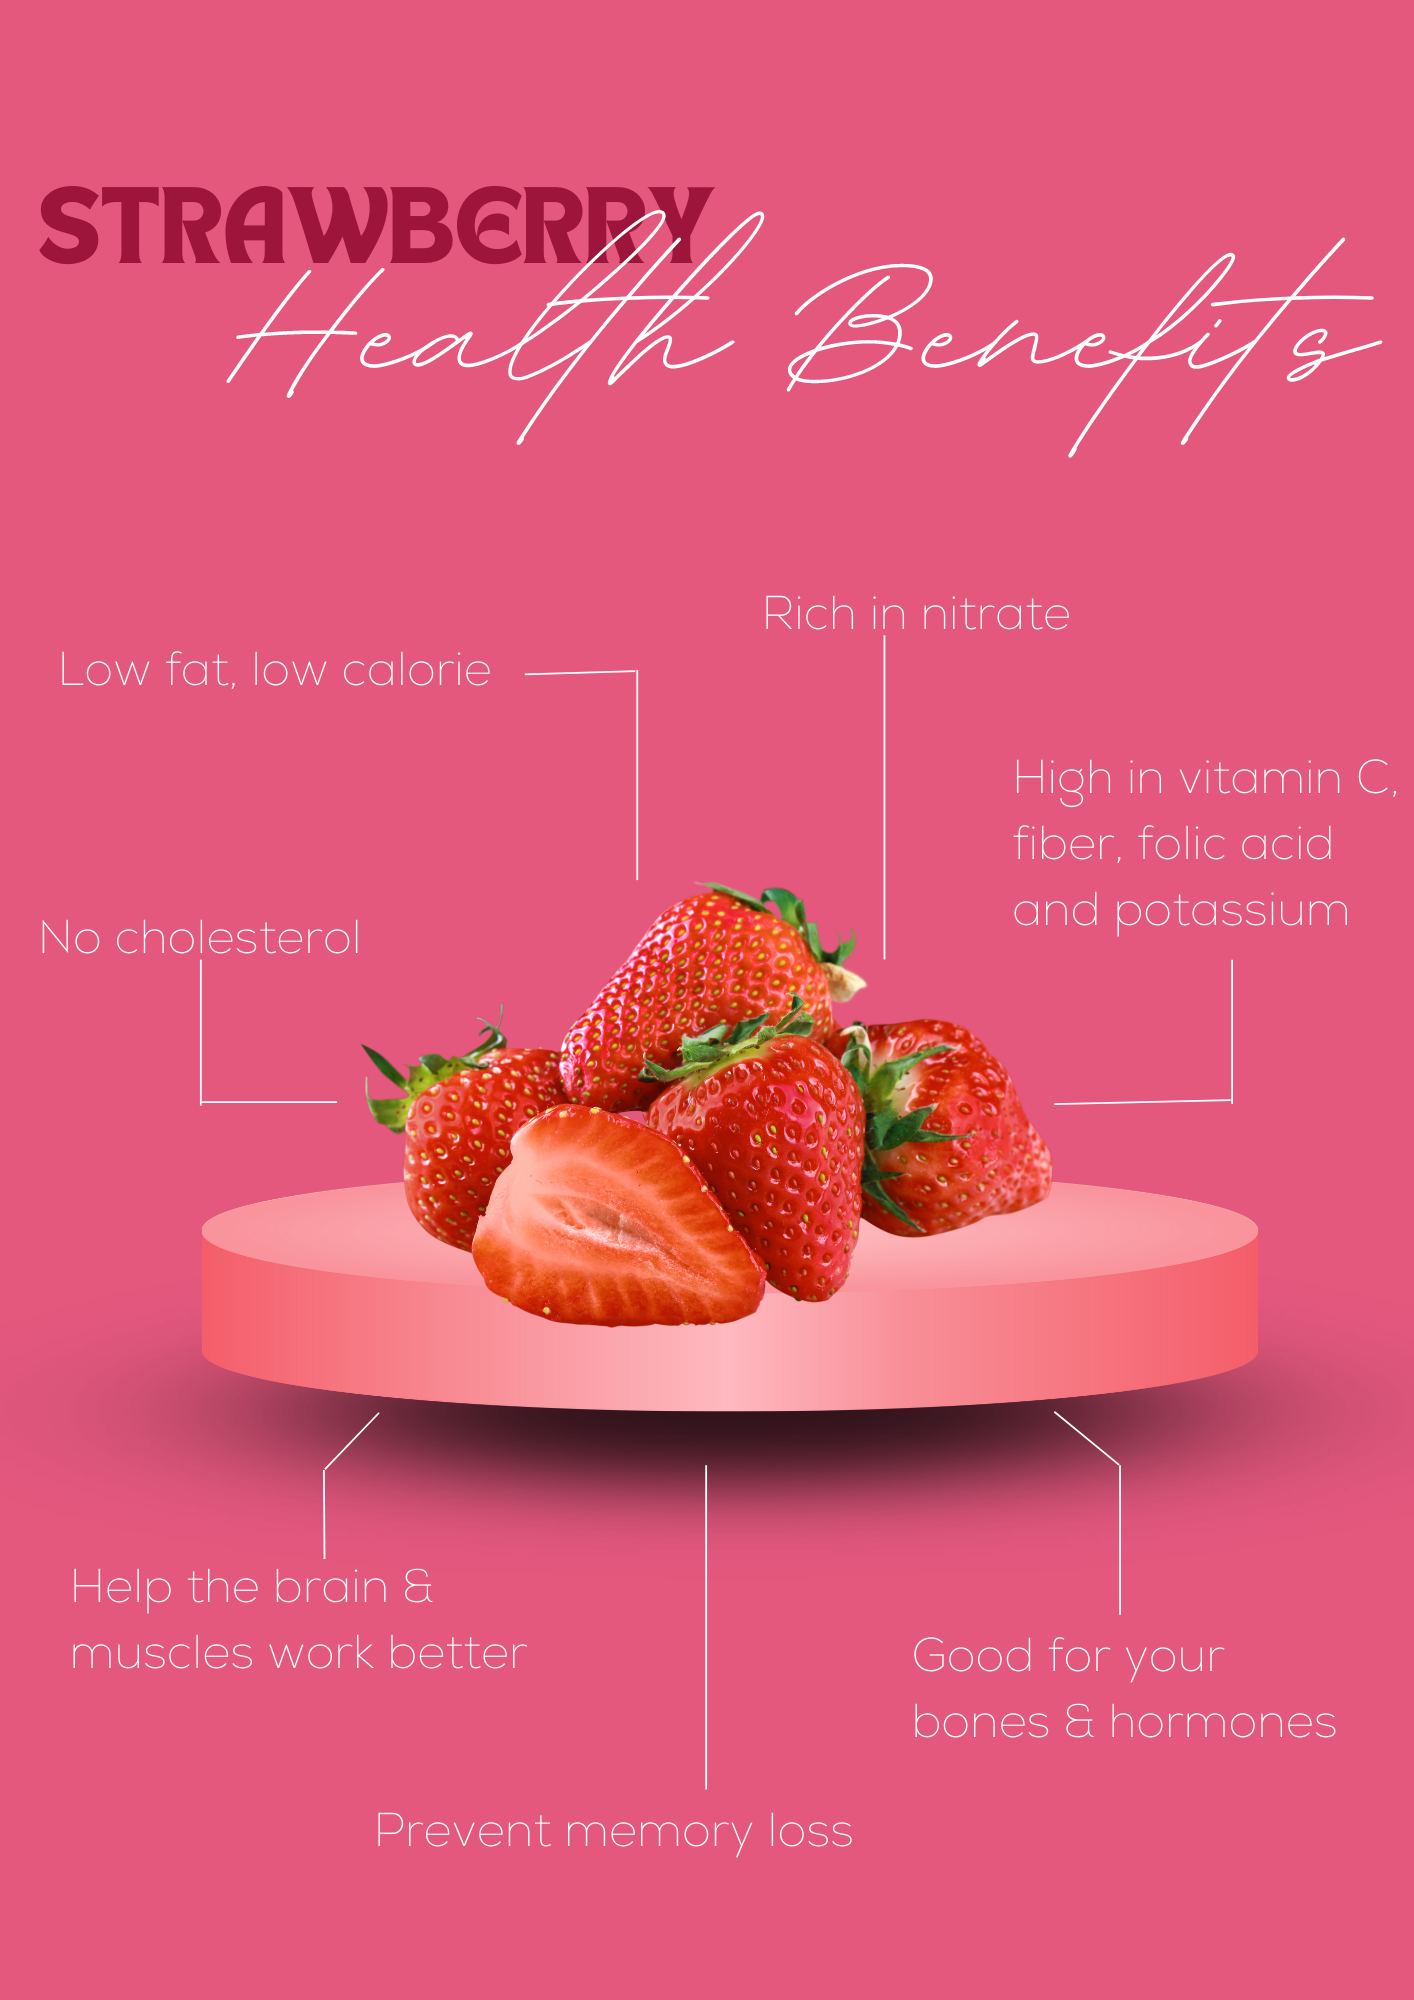 Strawberry Snack Food Health Benefits